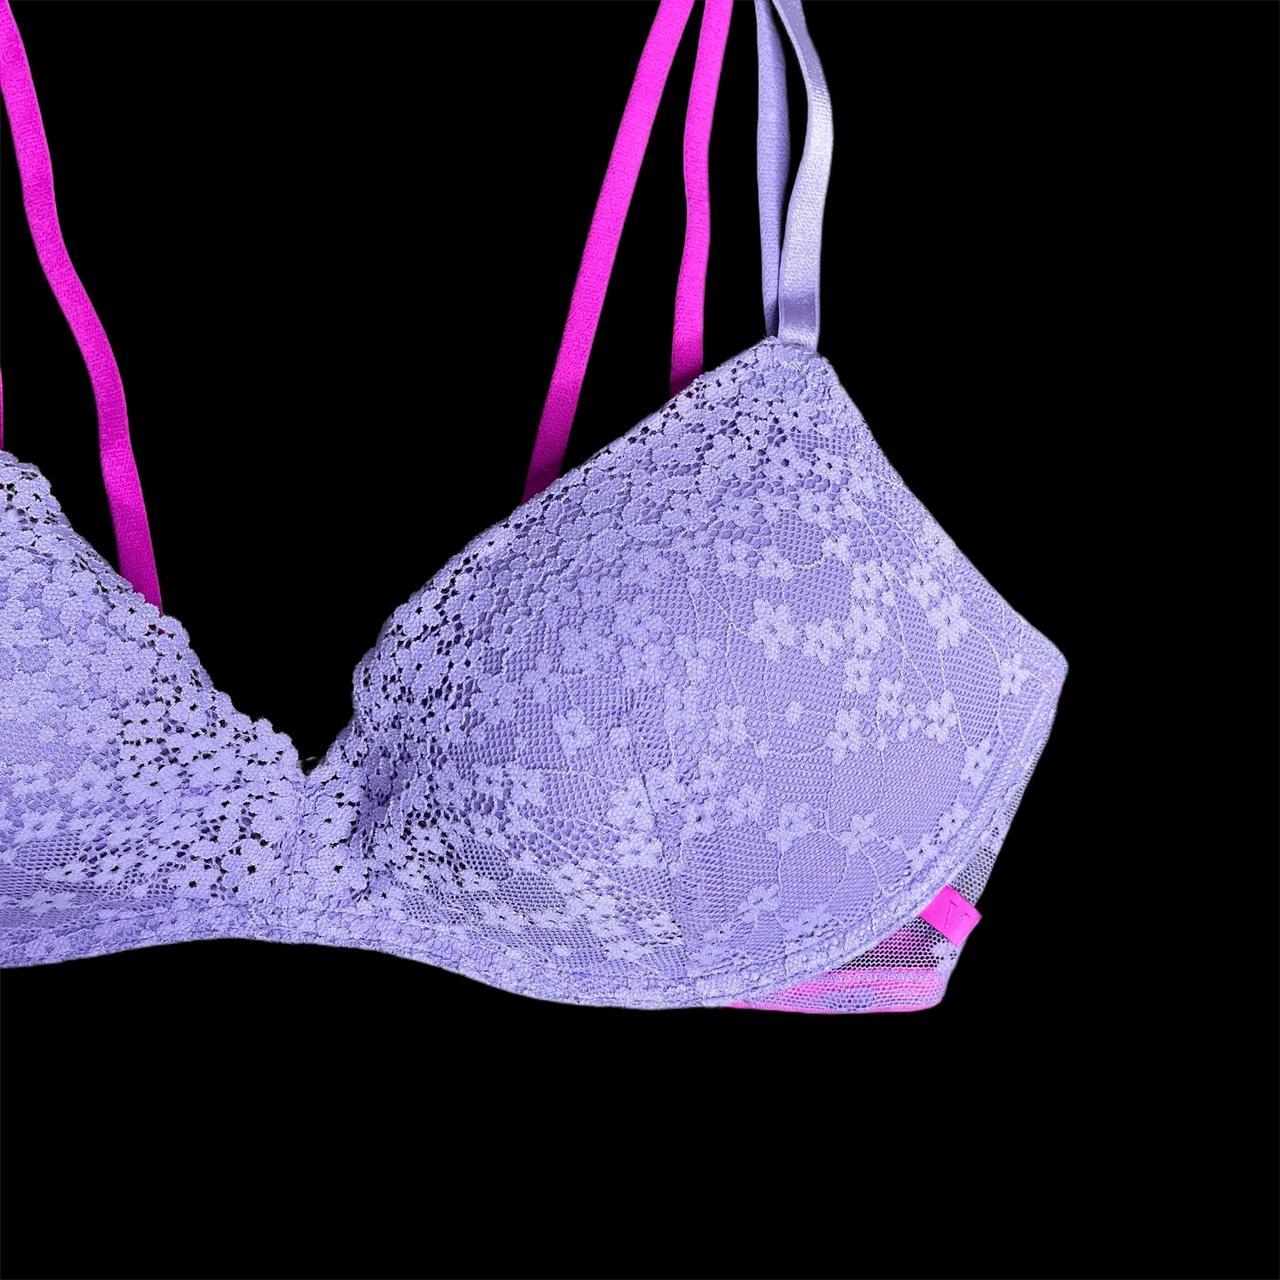 Women's Victoria's Secret push-up padded bra with - Depop